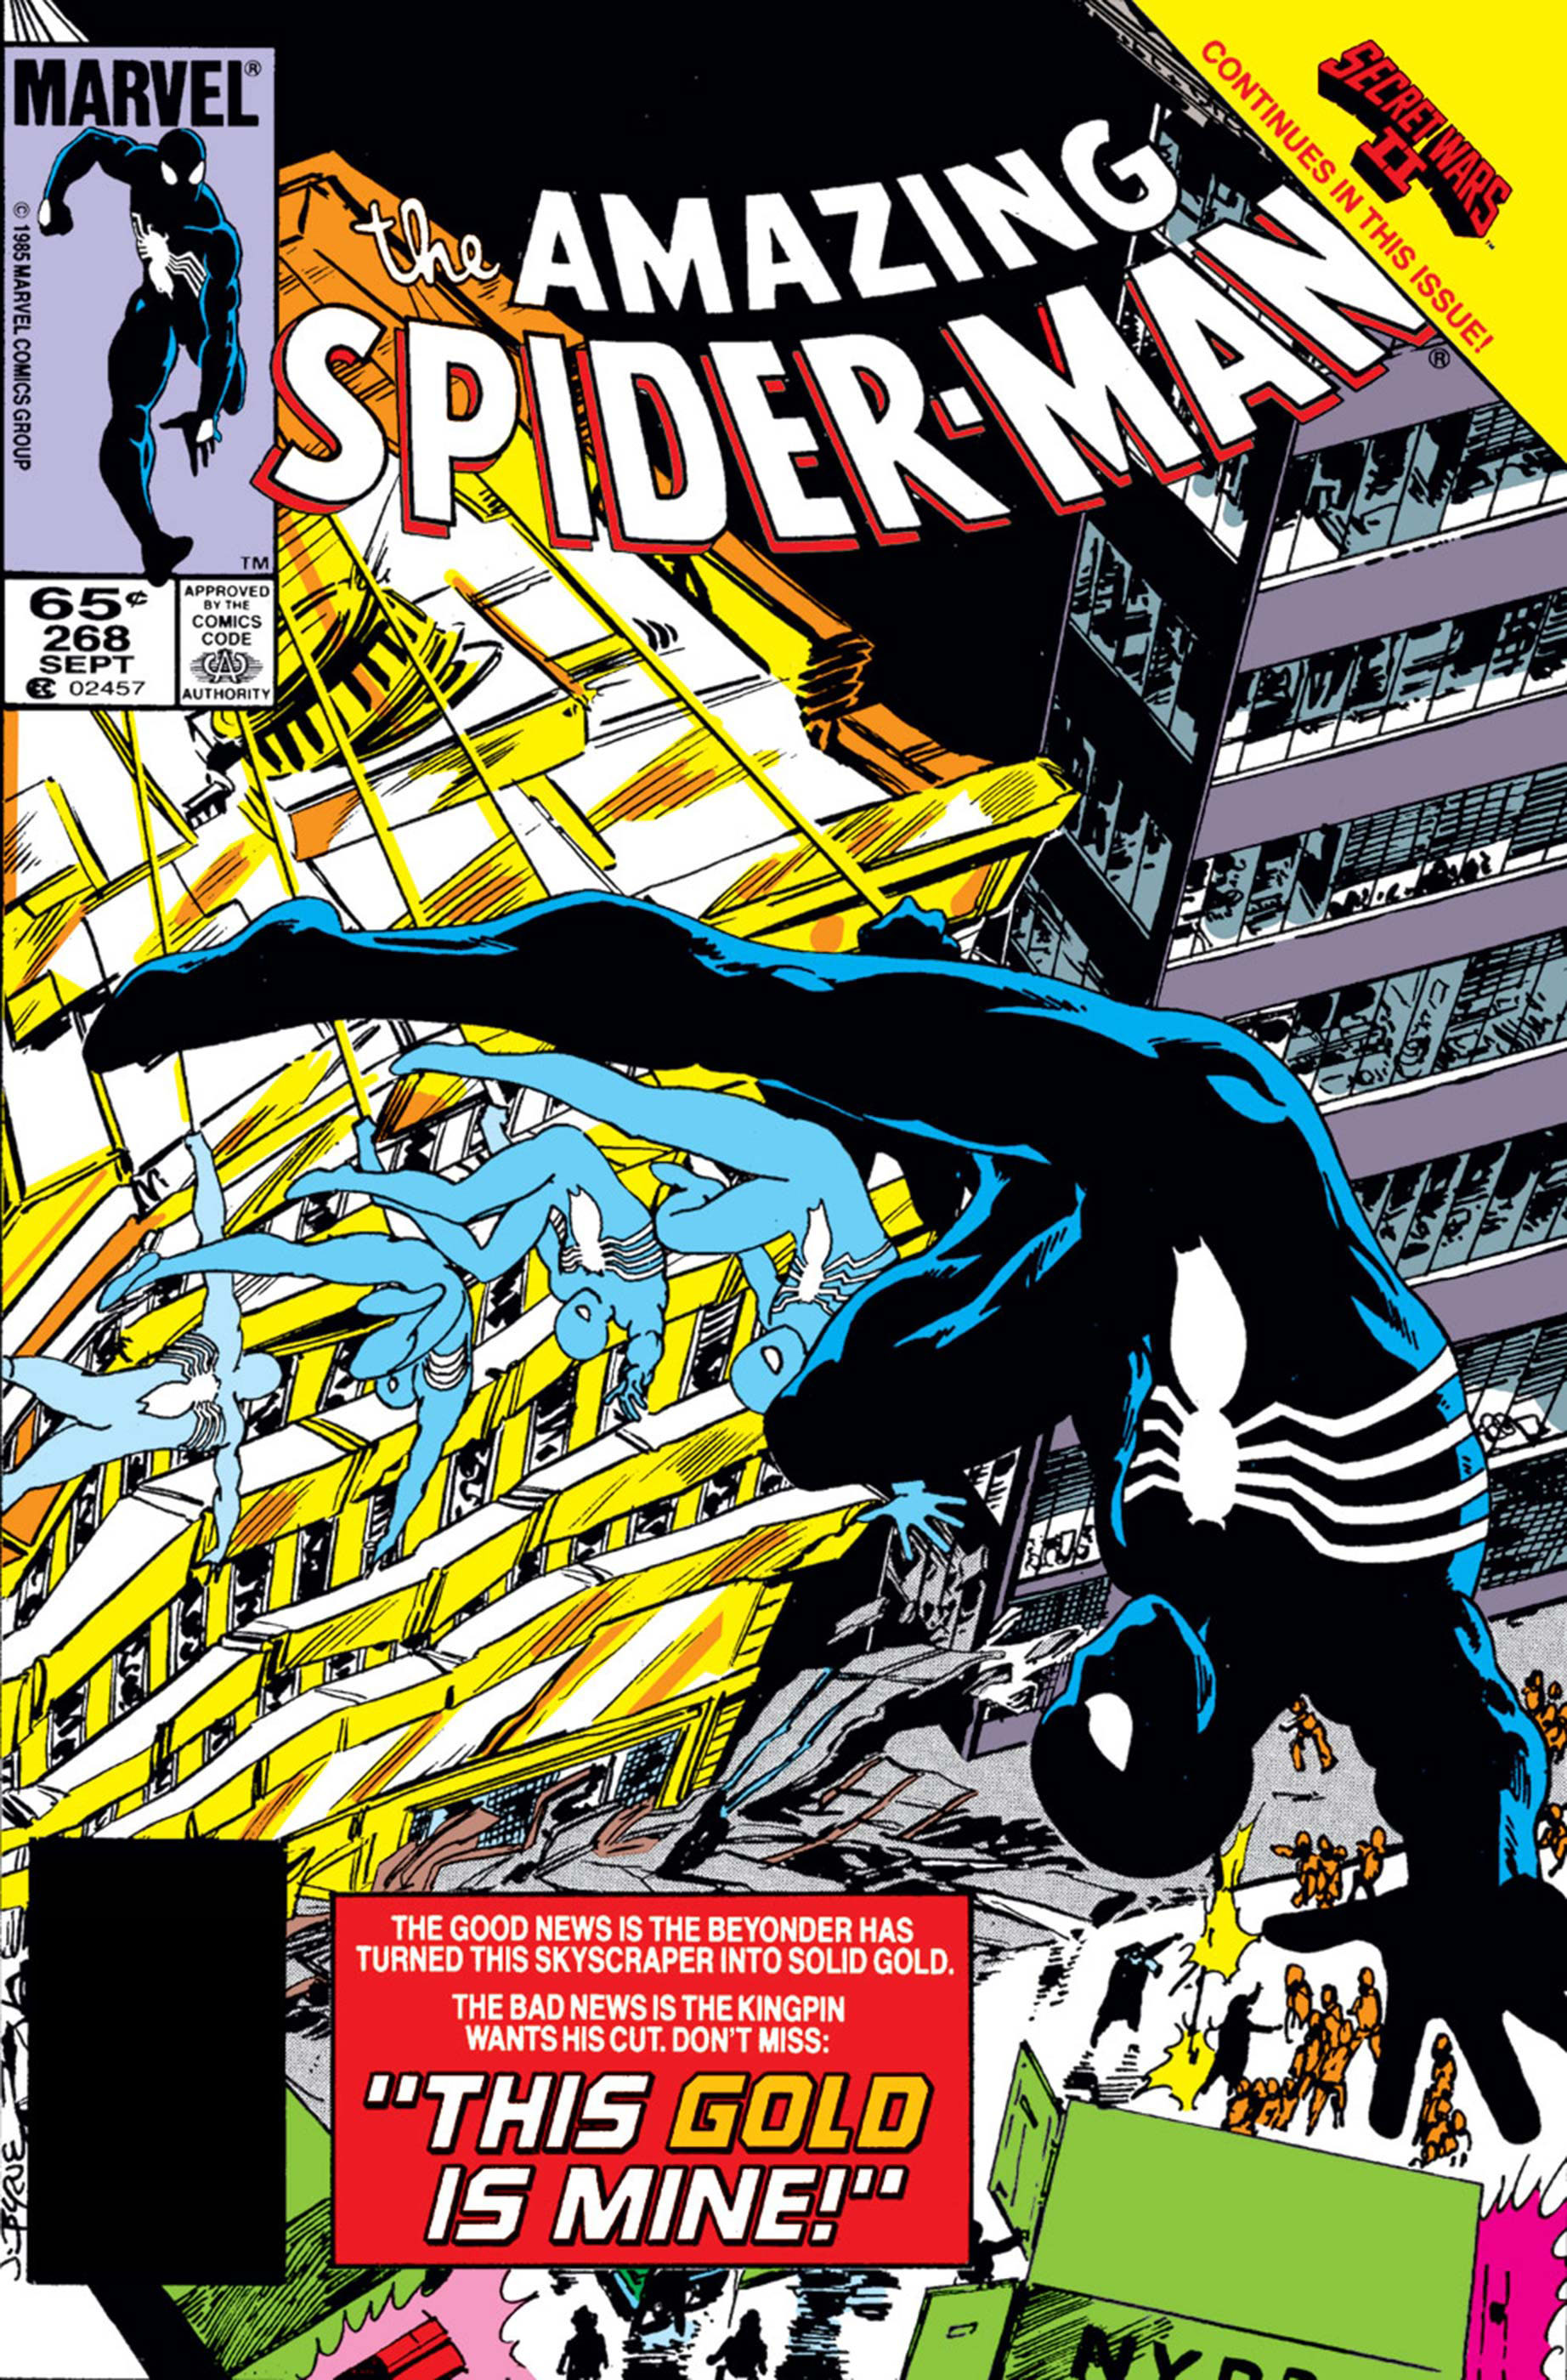 The Amazing Spider-Man (1963) #268